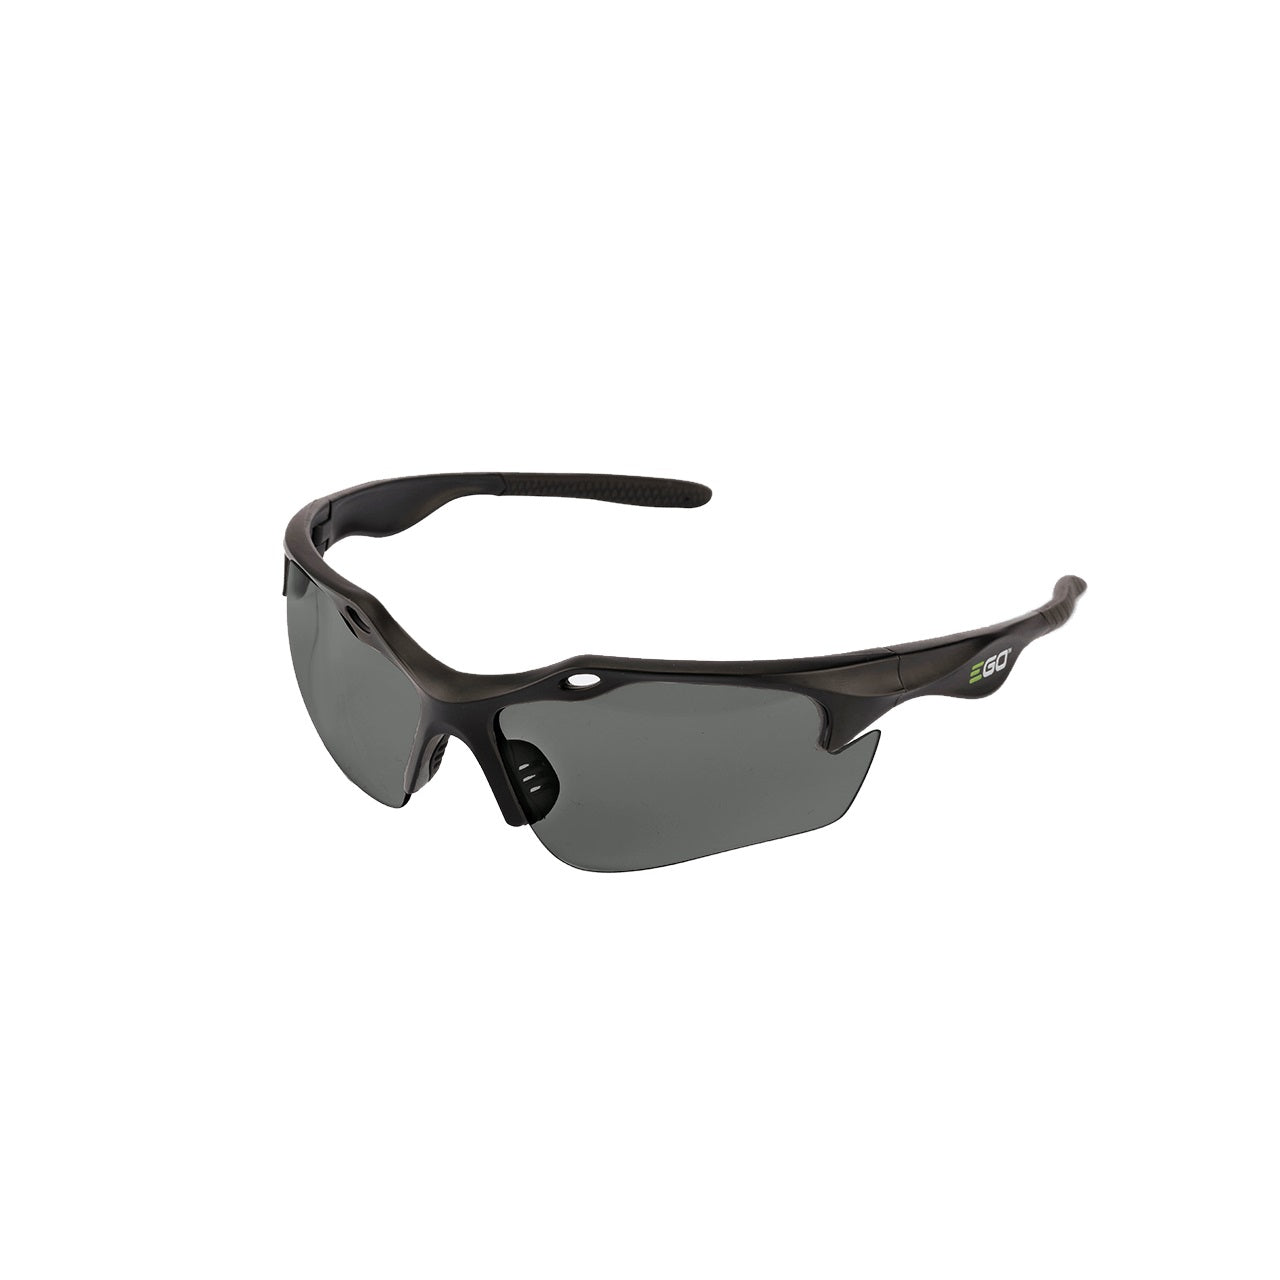 EGO GS002 Safety Glasses Grey